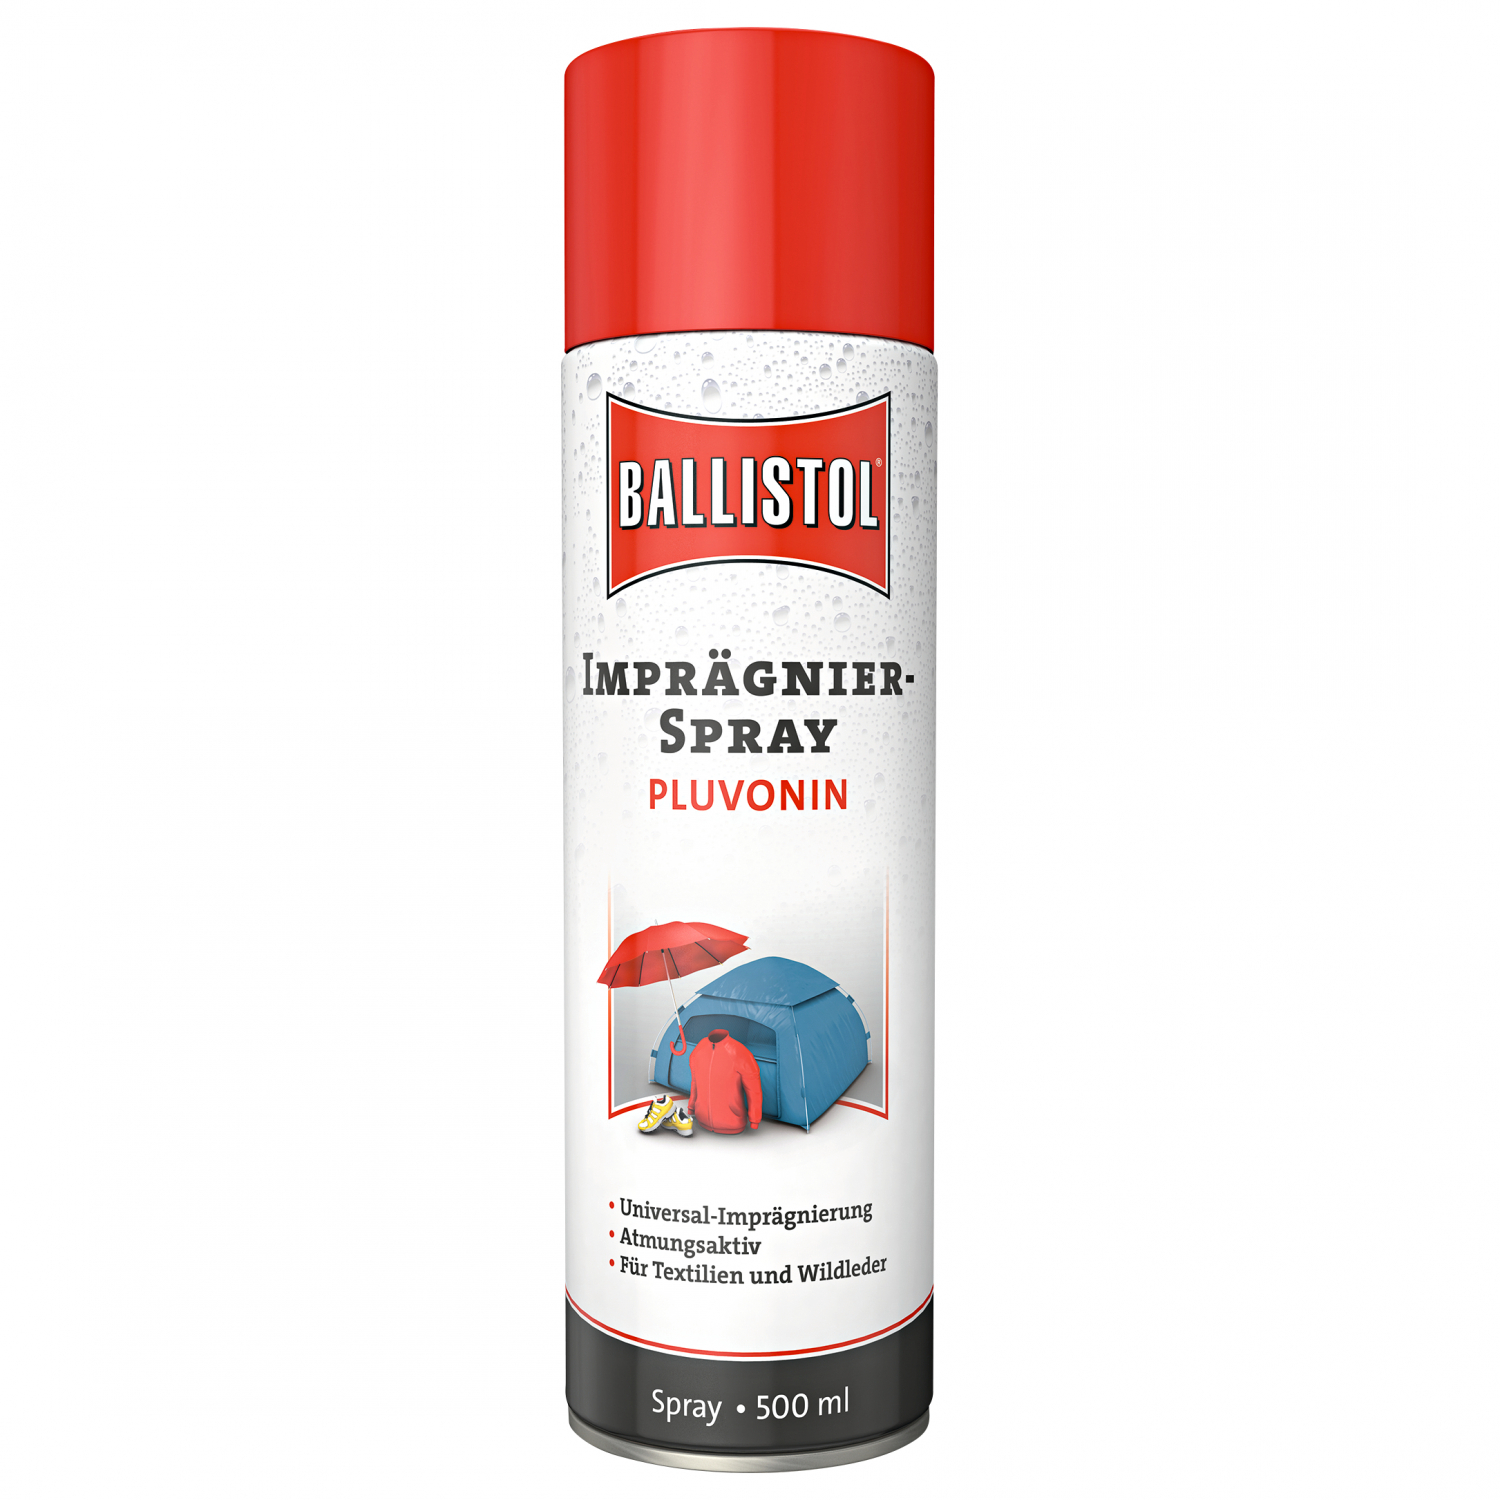 Ballistol Imprägnierspray Pluvonin (500 ml) 